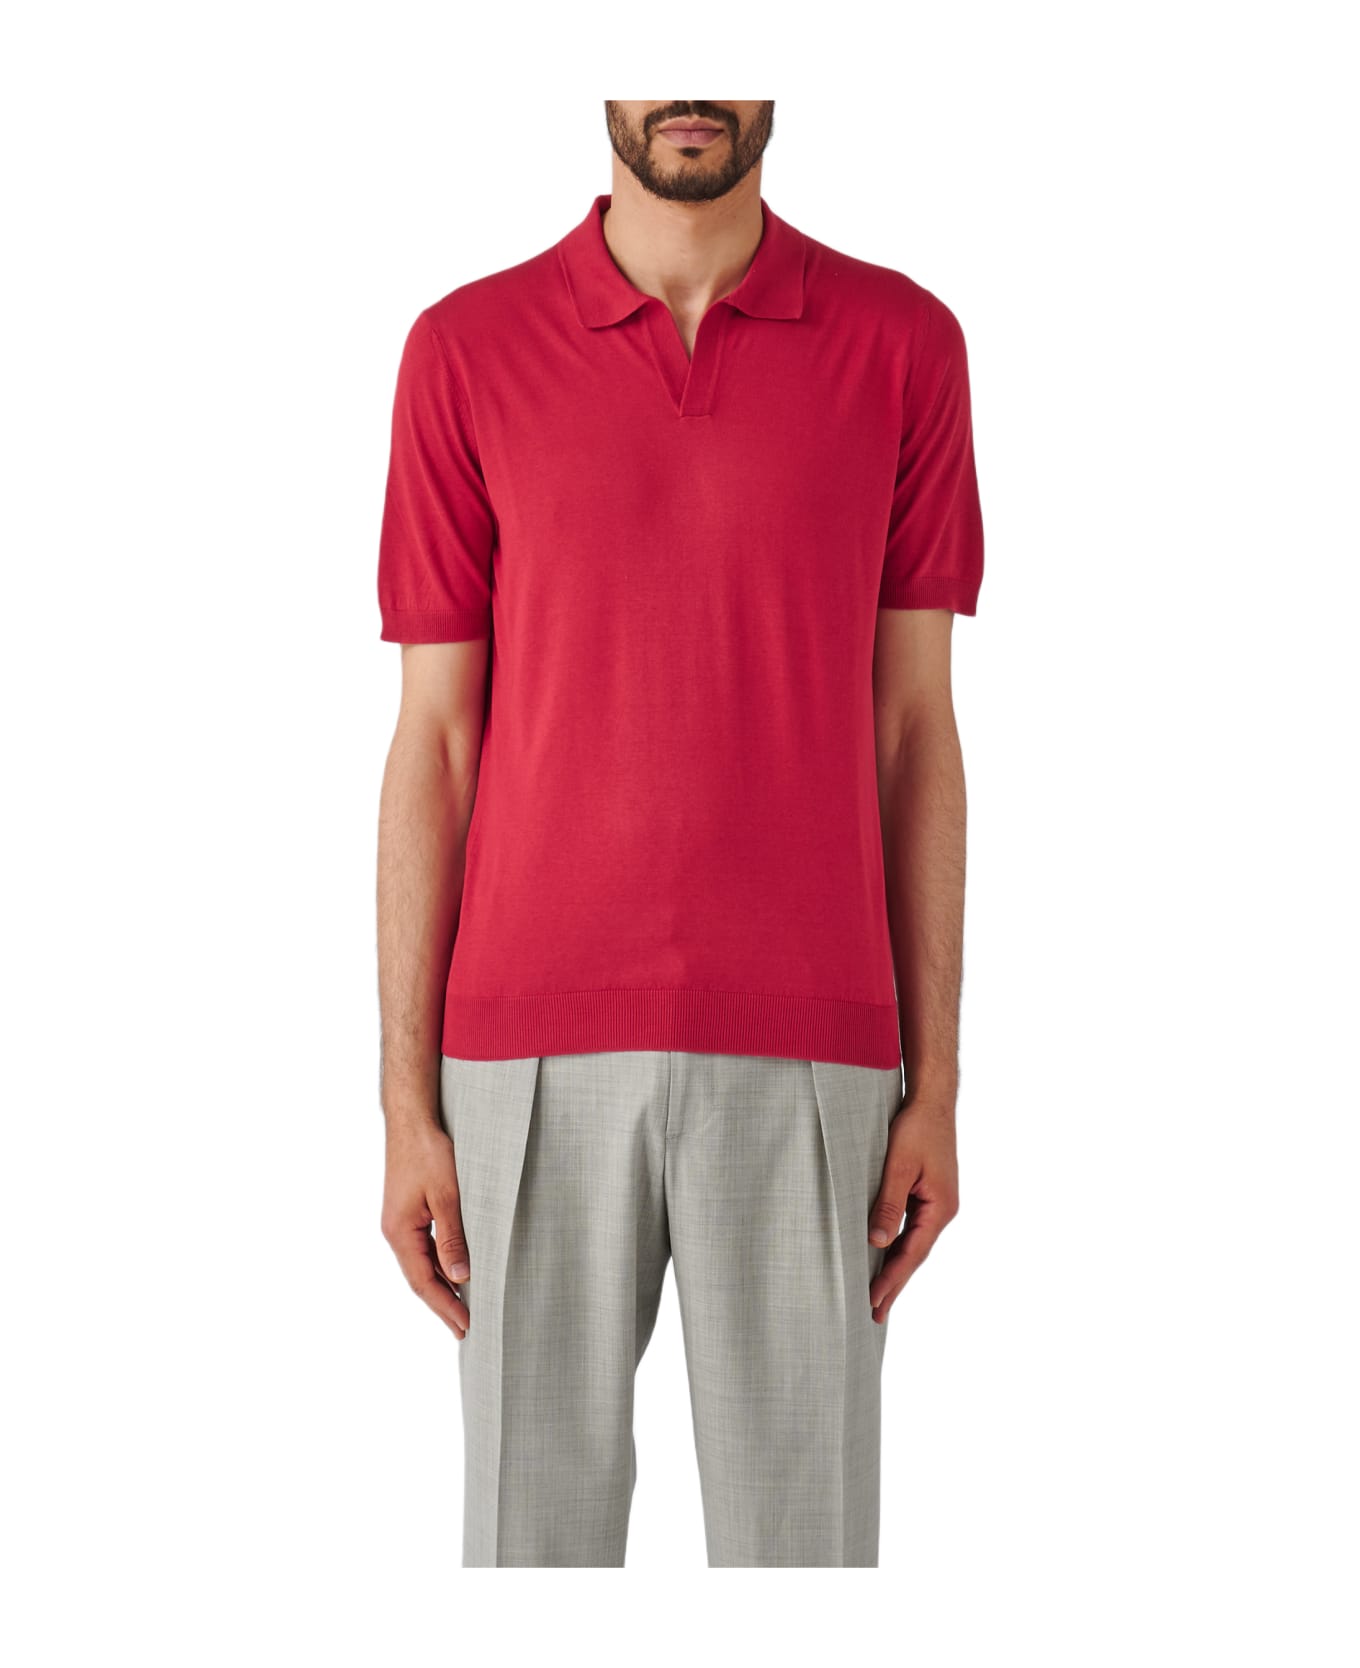 Gran Sasso Tennis M/m Skipper Sweater - ROSSO ポロシャツ